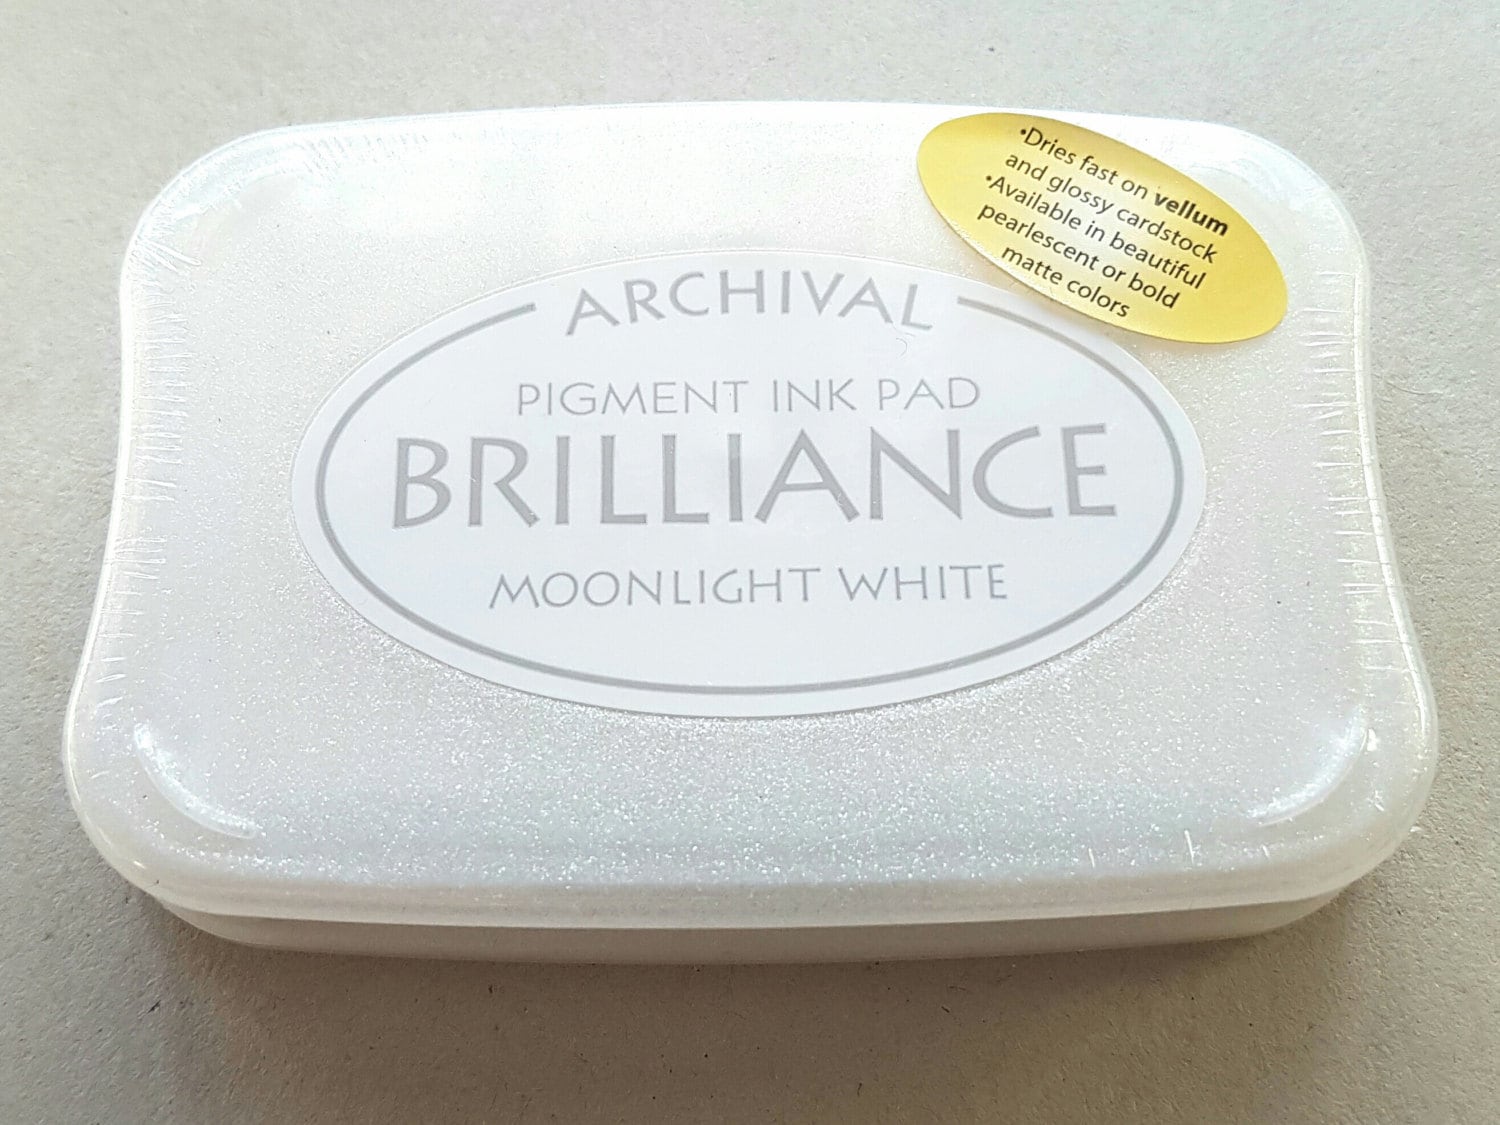 Brilliance Pigment Ink Pad Moonlight White